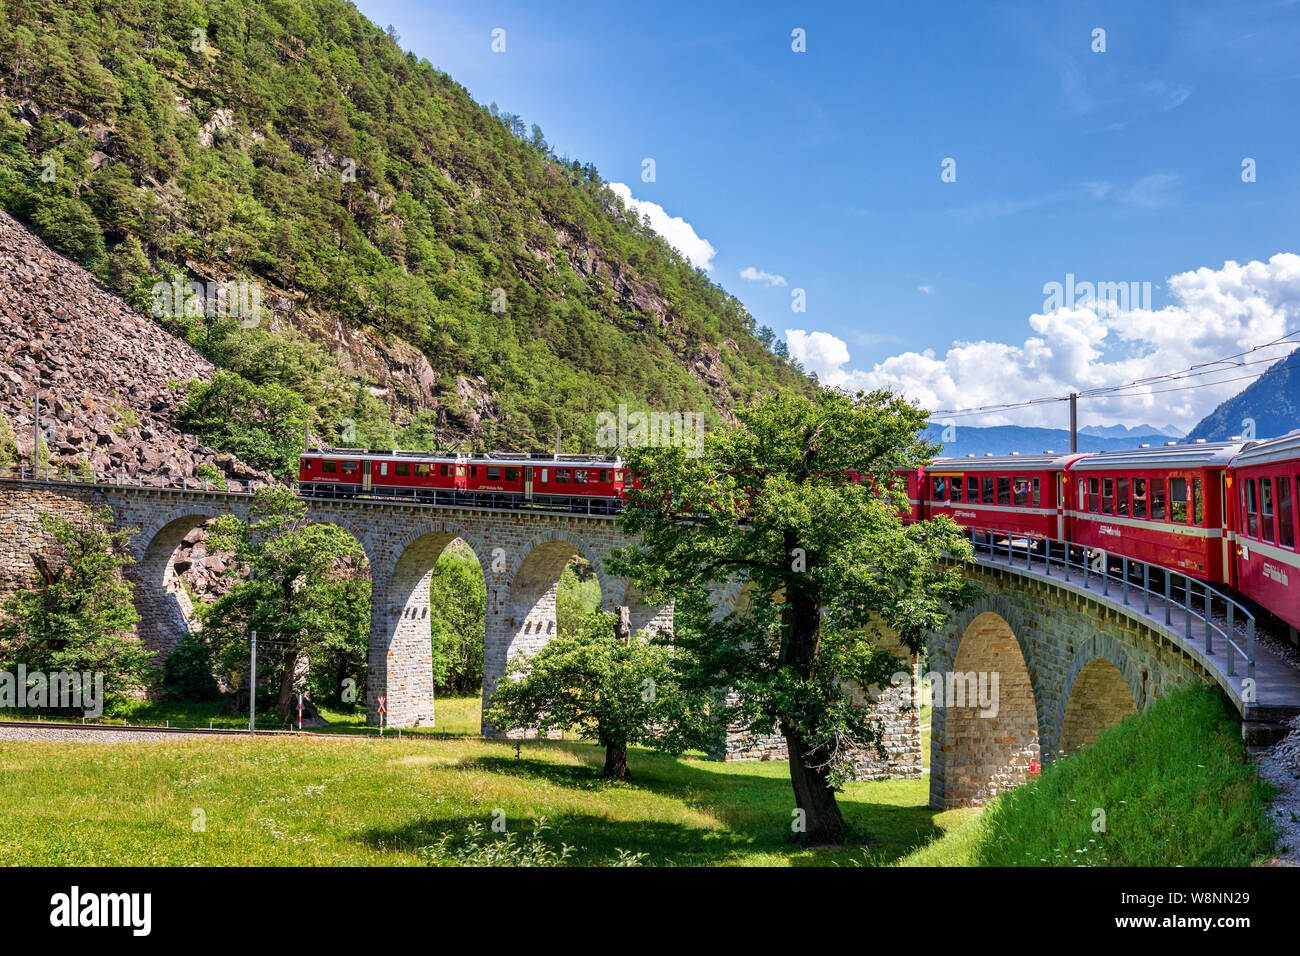 Circular viaduct of Brusio, Rhaetian Railway, Bernina Express, Brusio, Canton of Graubünden, Switzerland Stock Photo